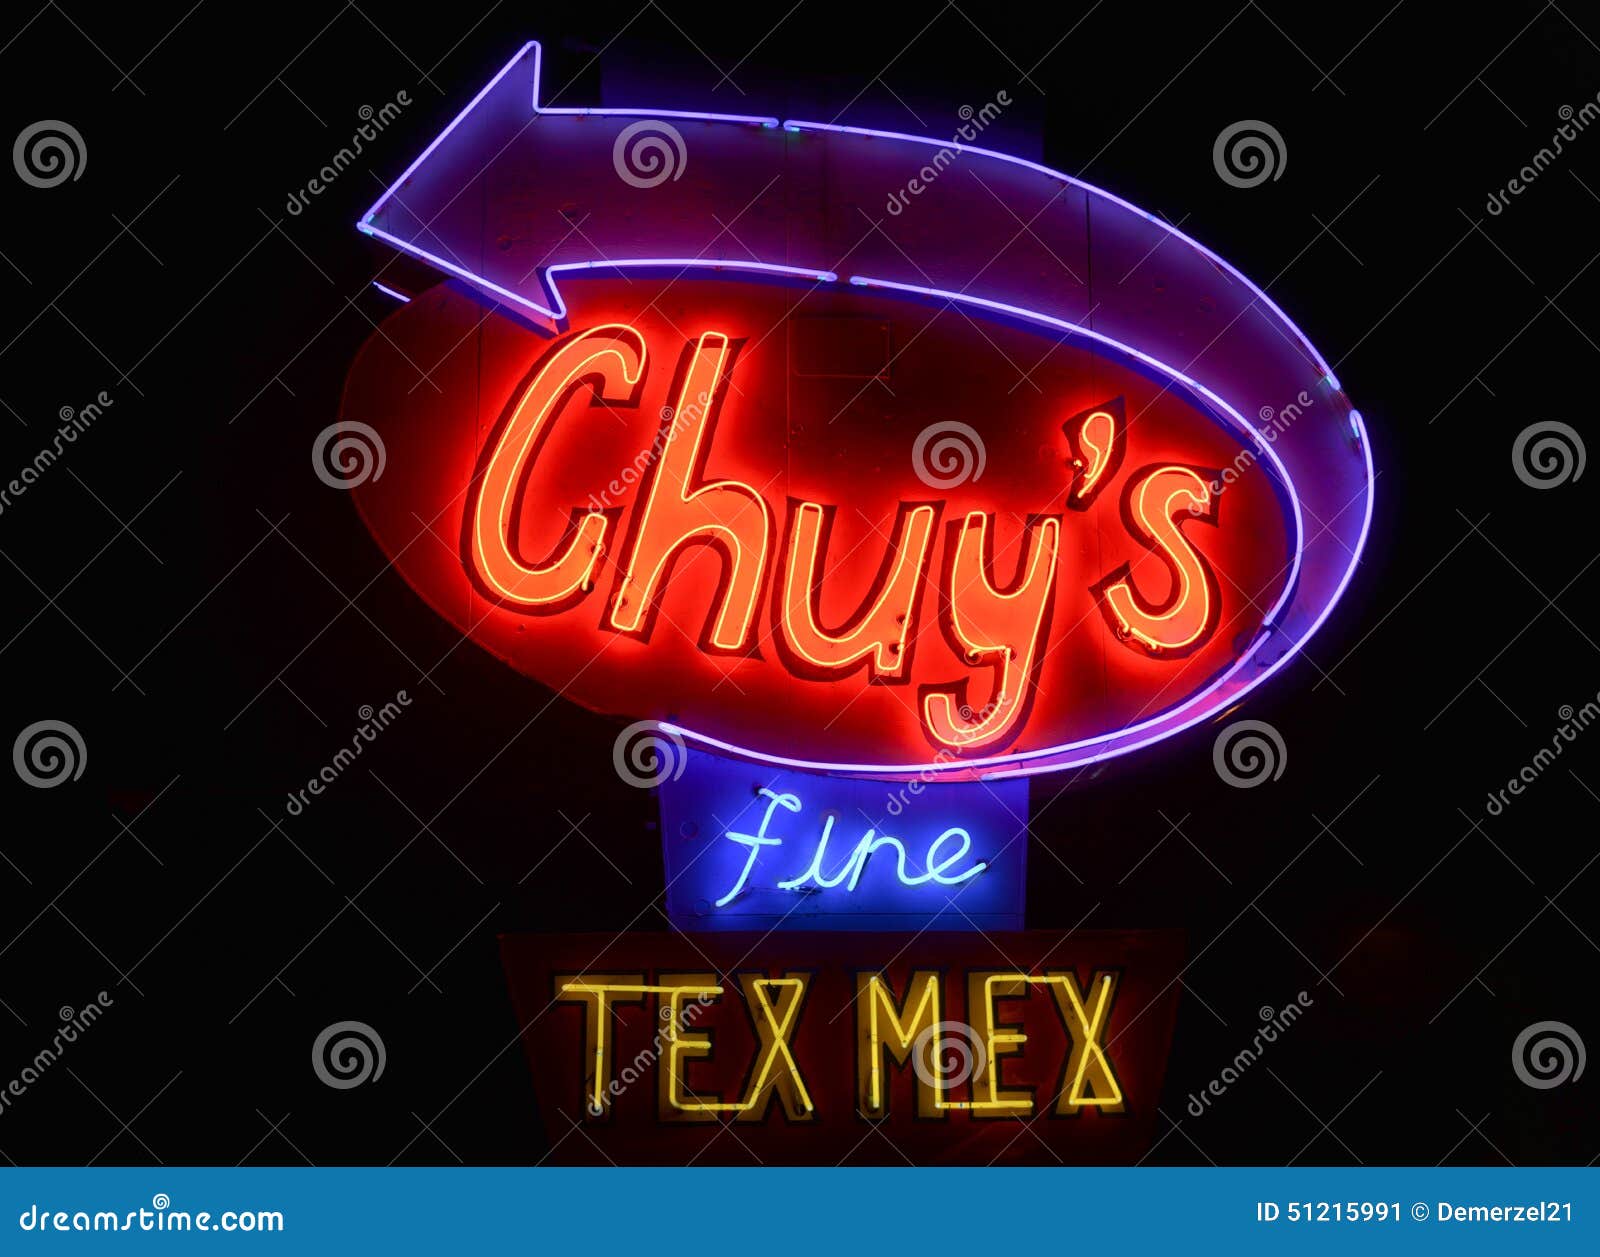 chuy's fine texmex restaurant